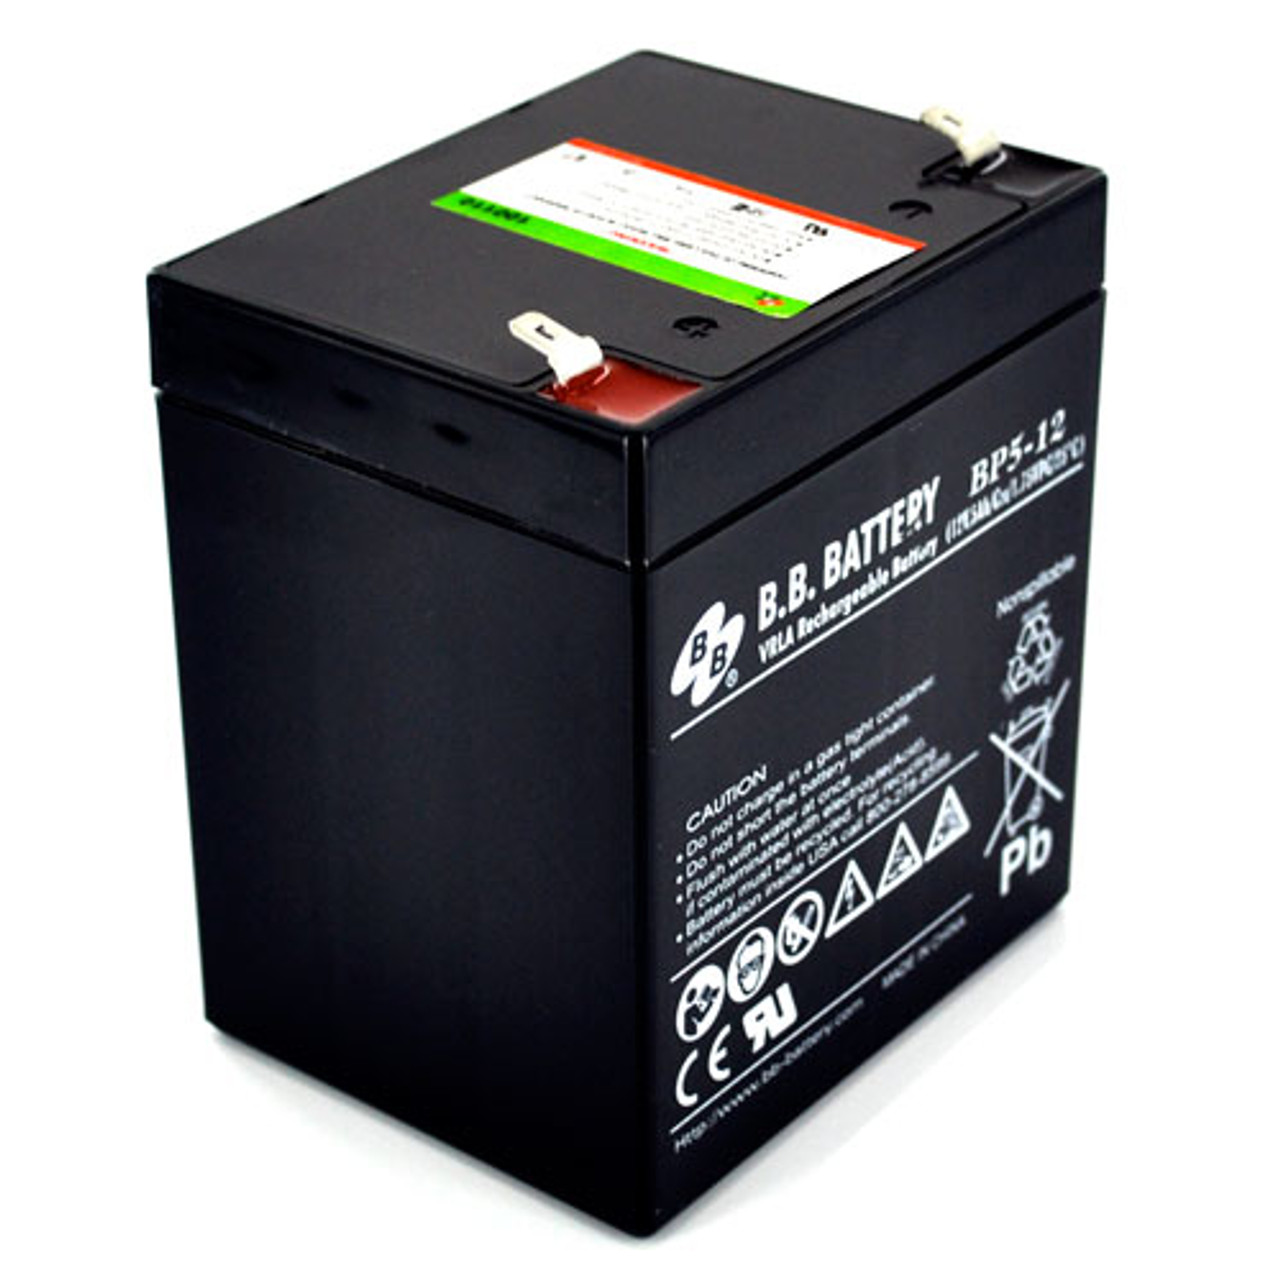 Power-Sonic PS-12120 F2  Rechargeable SLA Battery 12v 12ah - $33.60